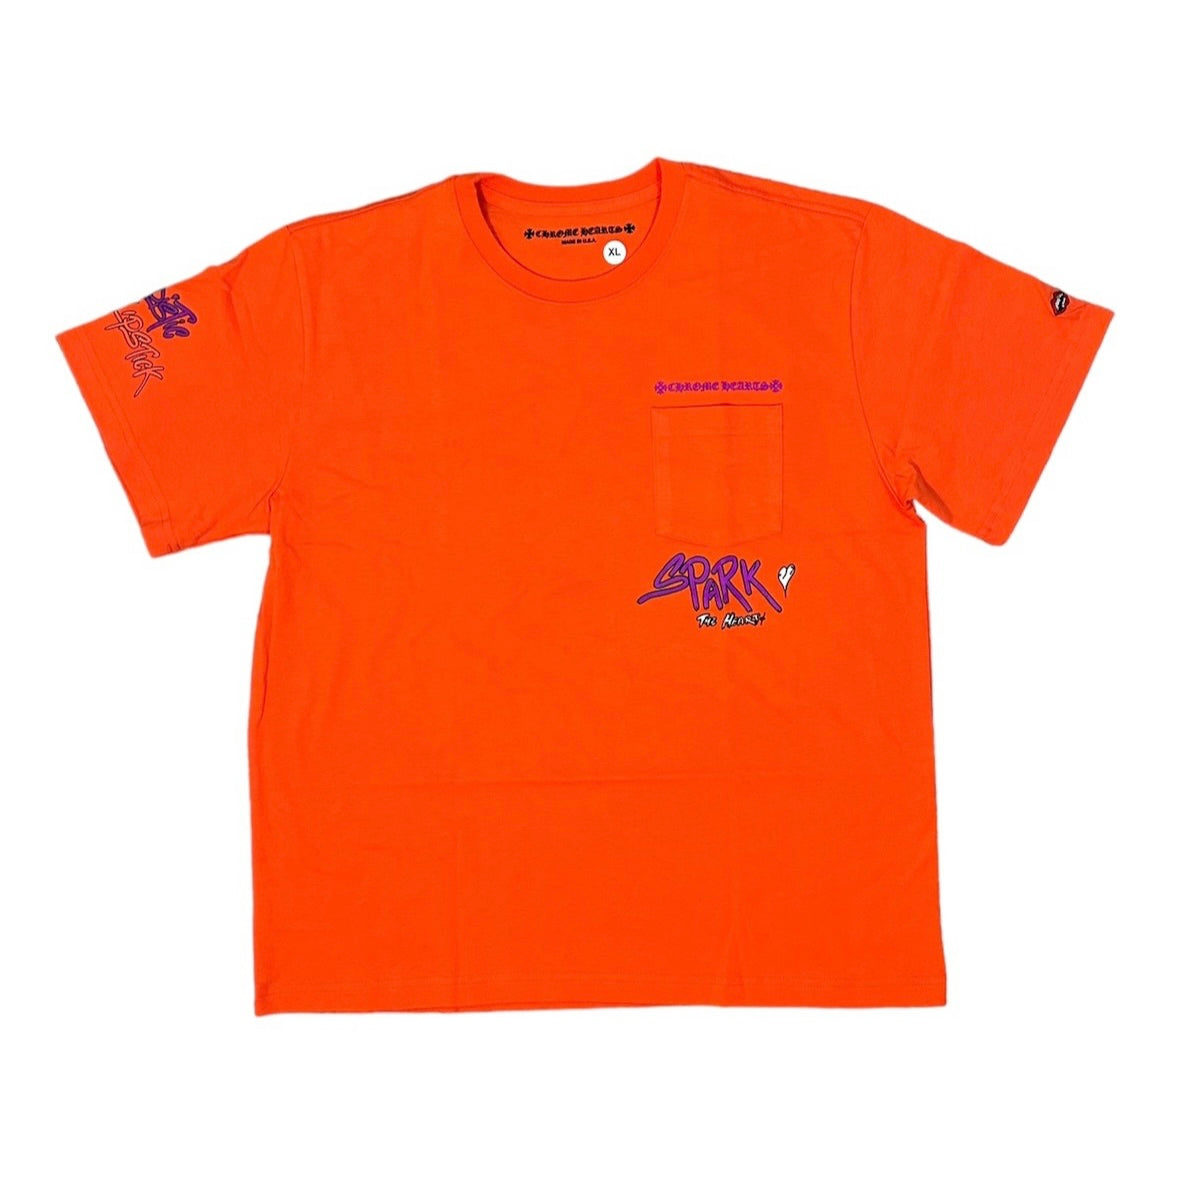 Chrome Hearts Matty Boy Spark T-Shirt Orange